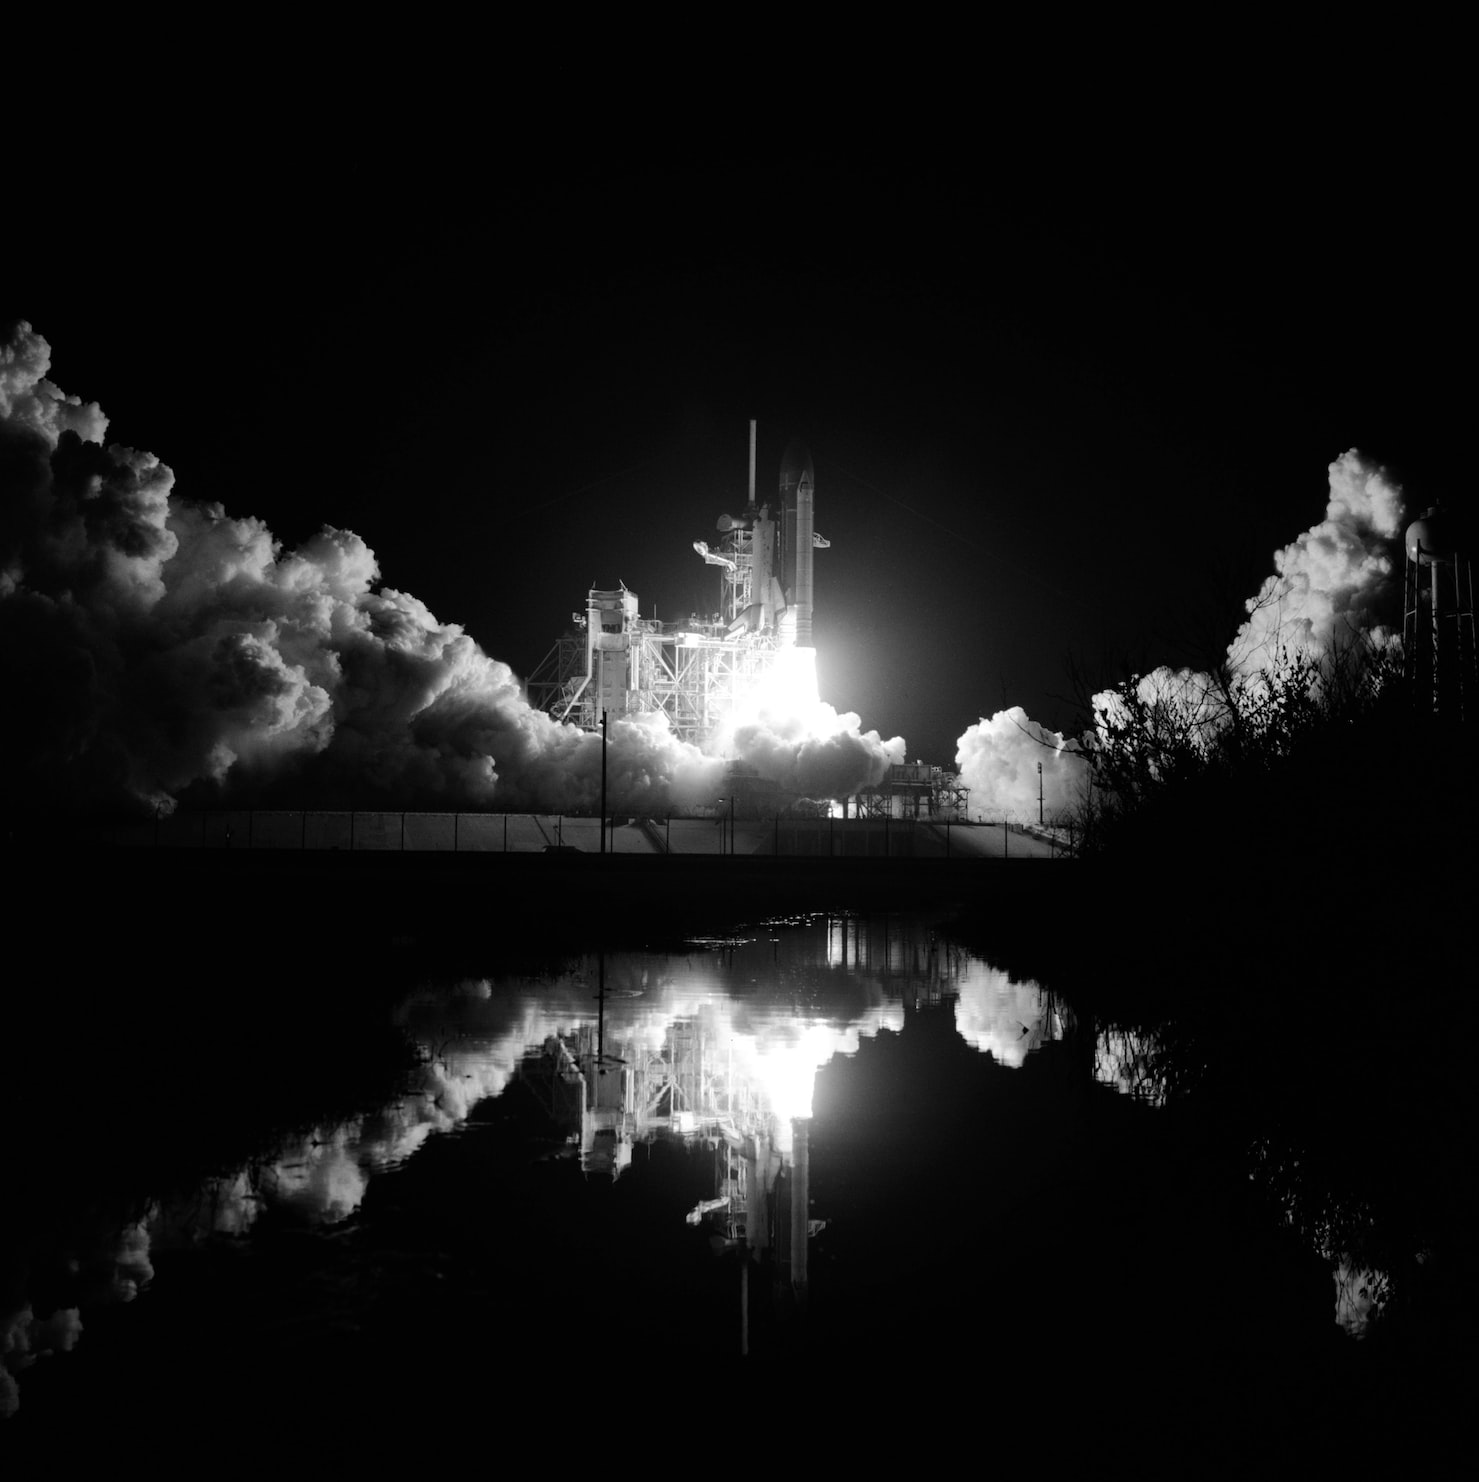 A space shuttle launching